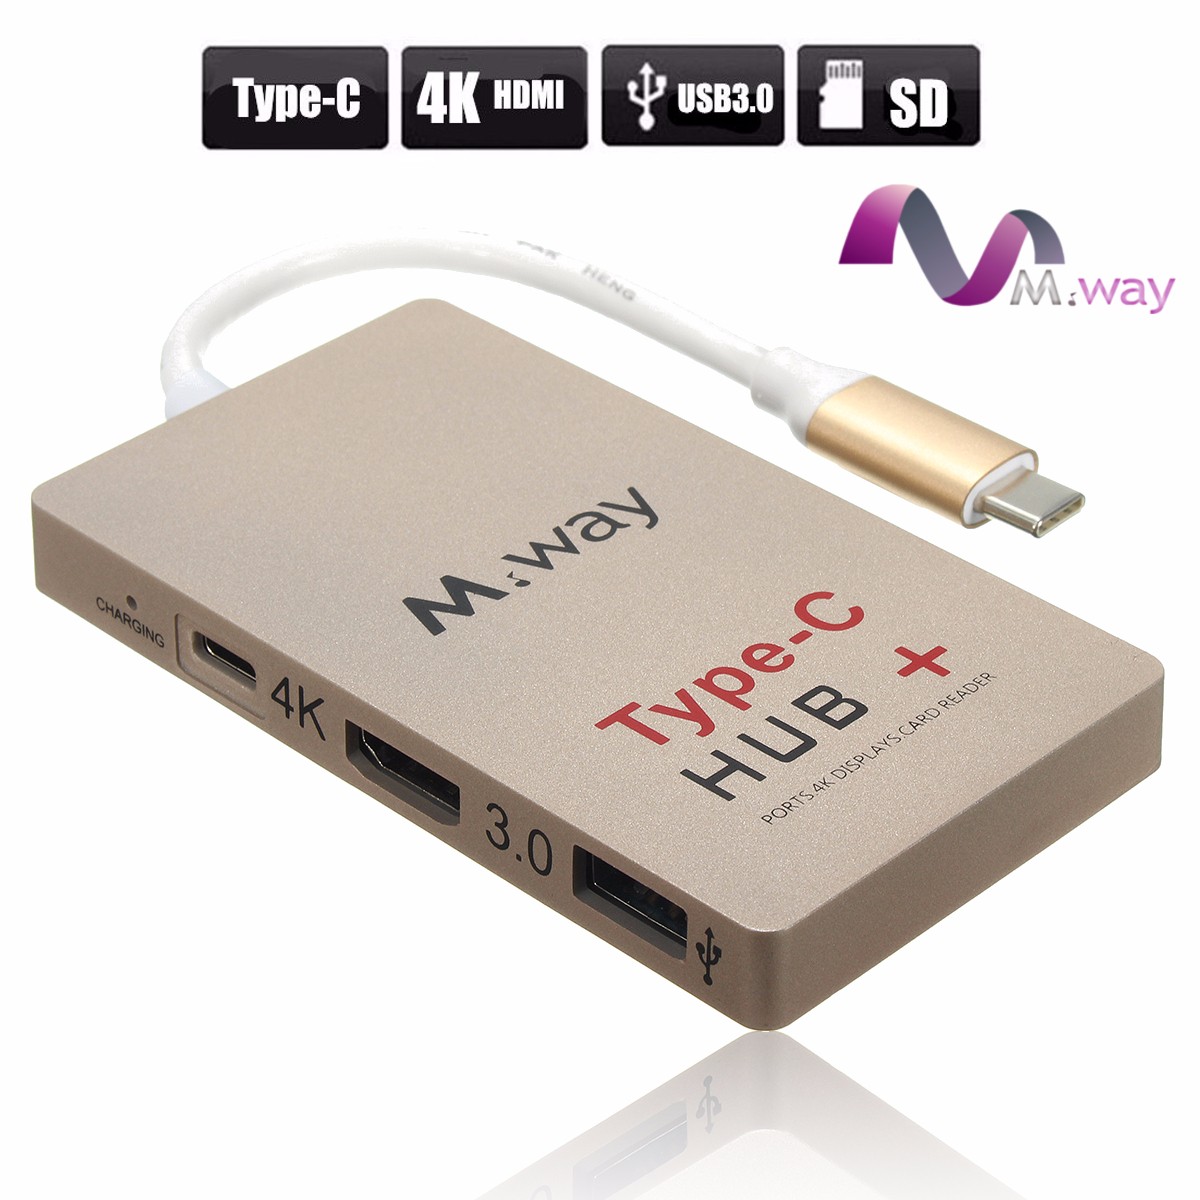 USB 3.1 Type-C to 4k HDMI USB 3.0 HUB  SD Card Reader Adapter